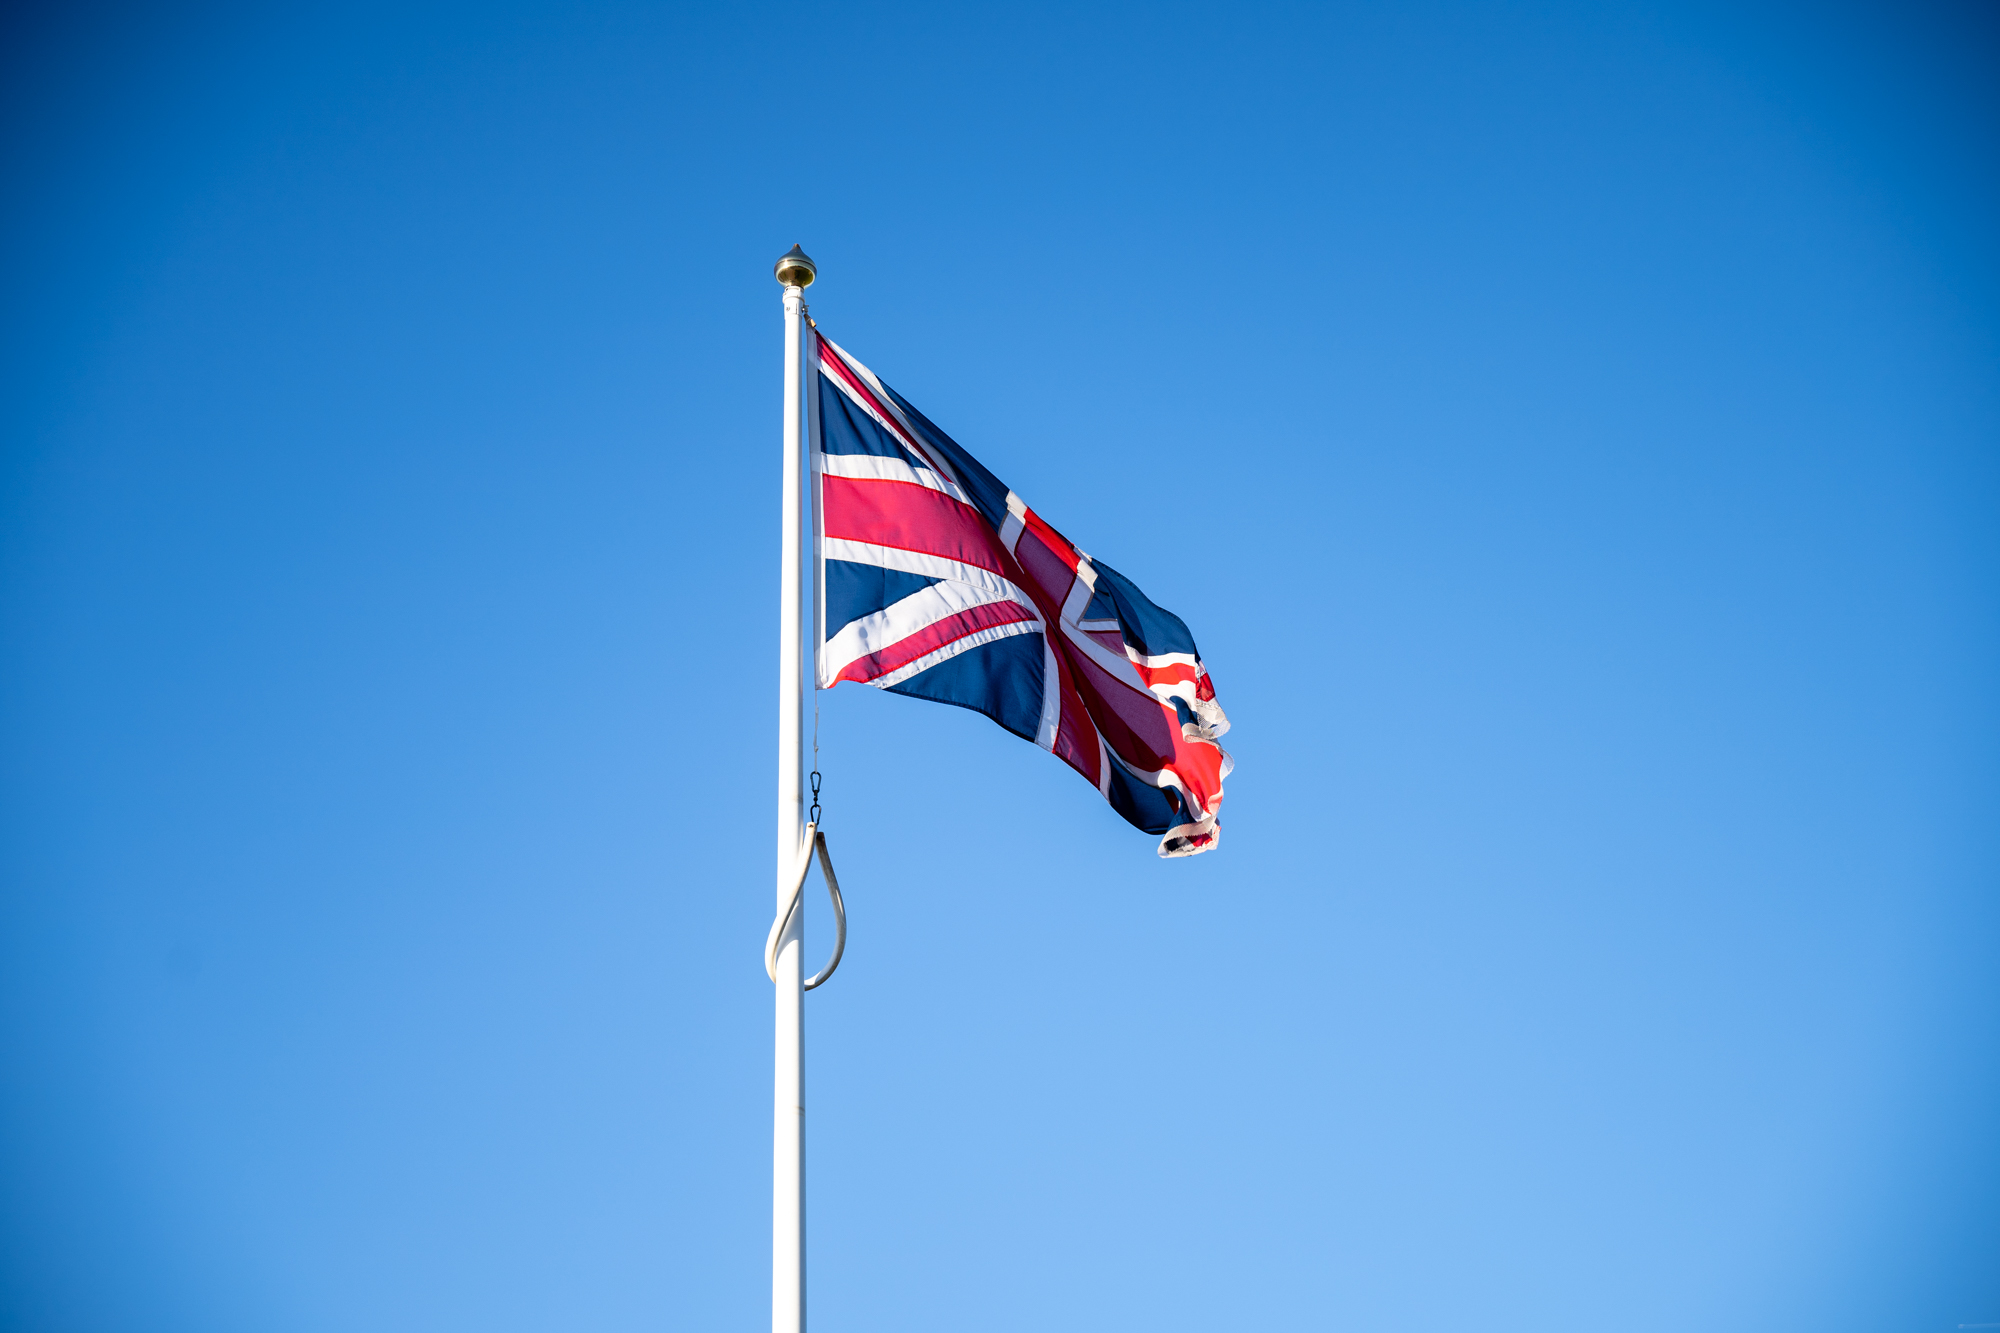 Sony FE 20-70mm F4 G lens sample image of United Kingdom flag